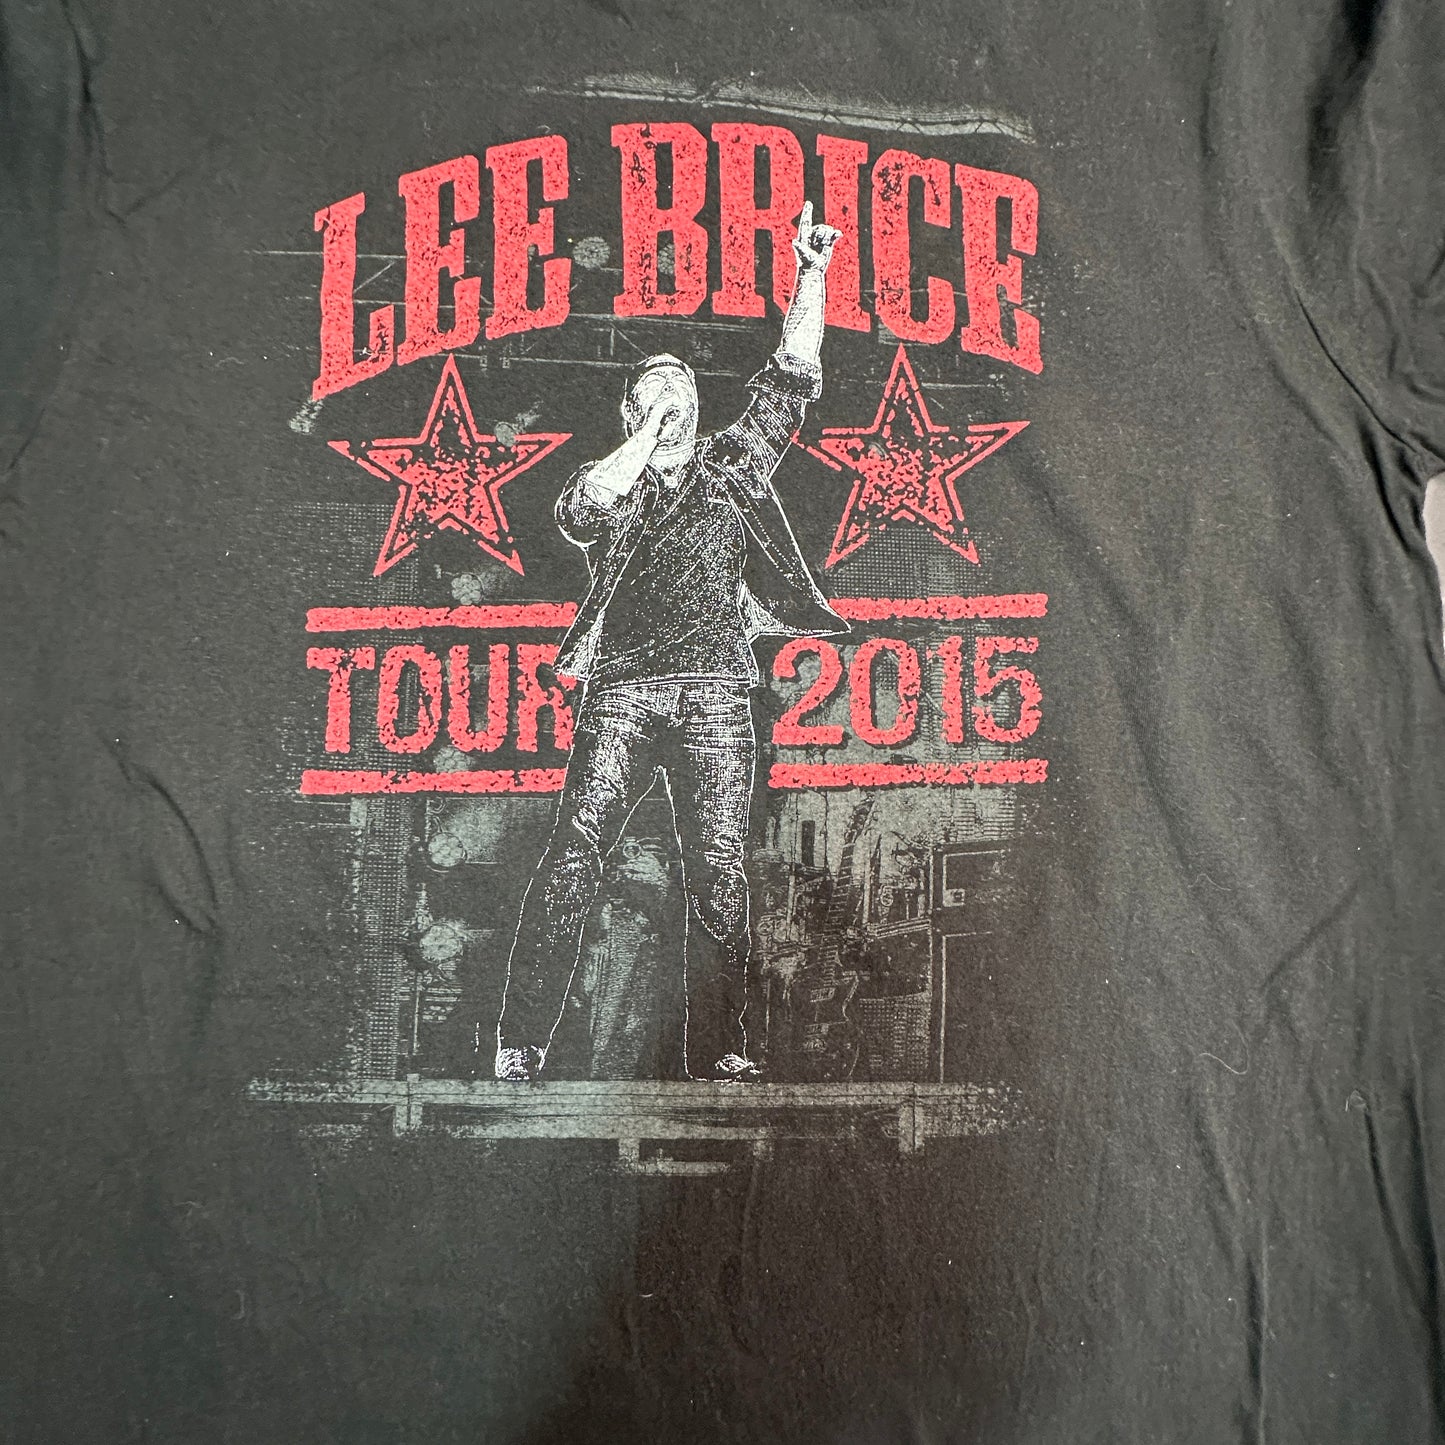 2015 Lee Brice Tour Tee